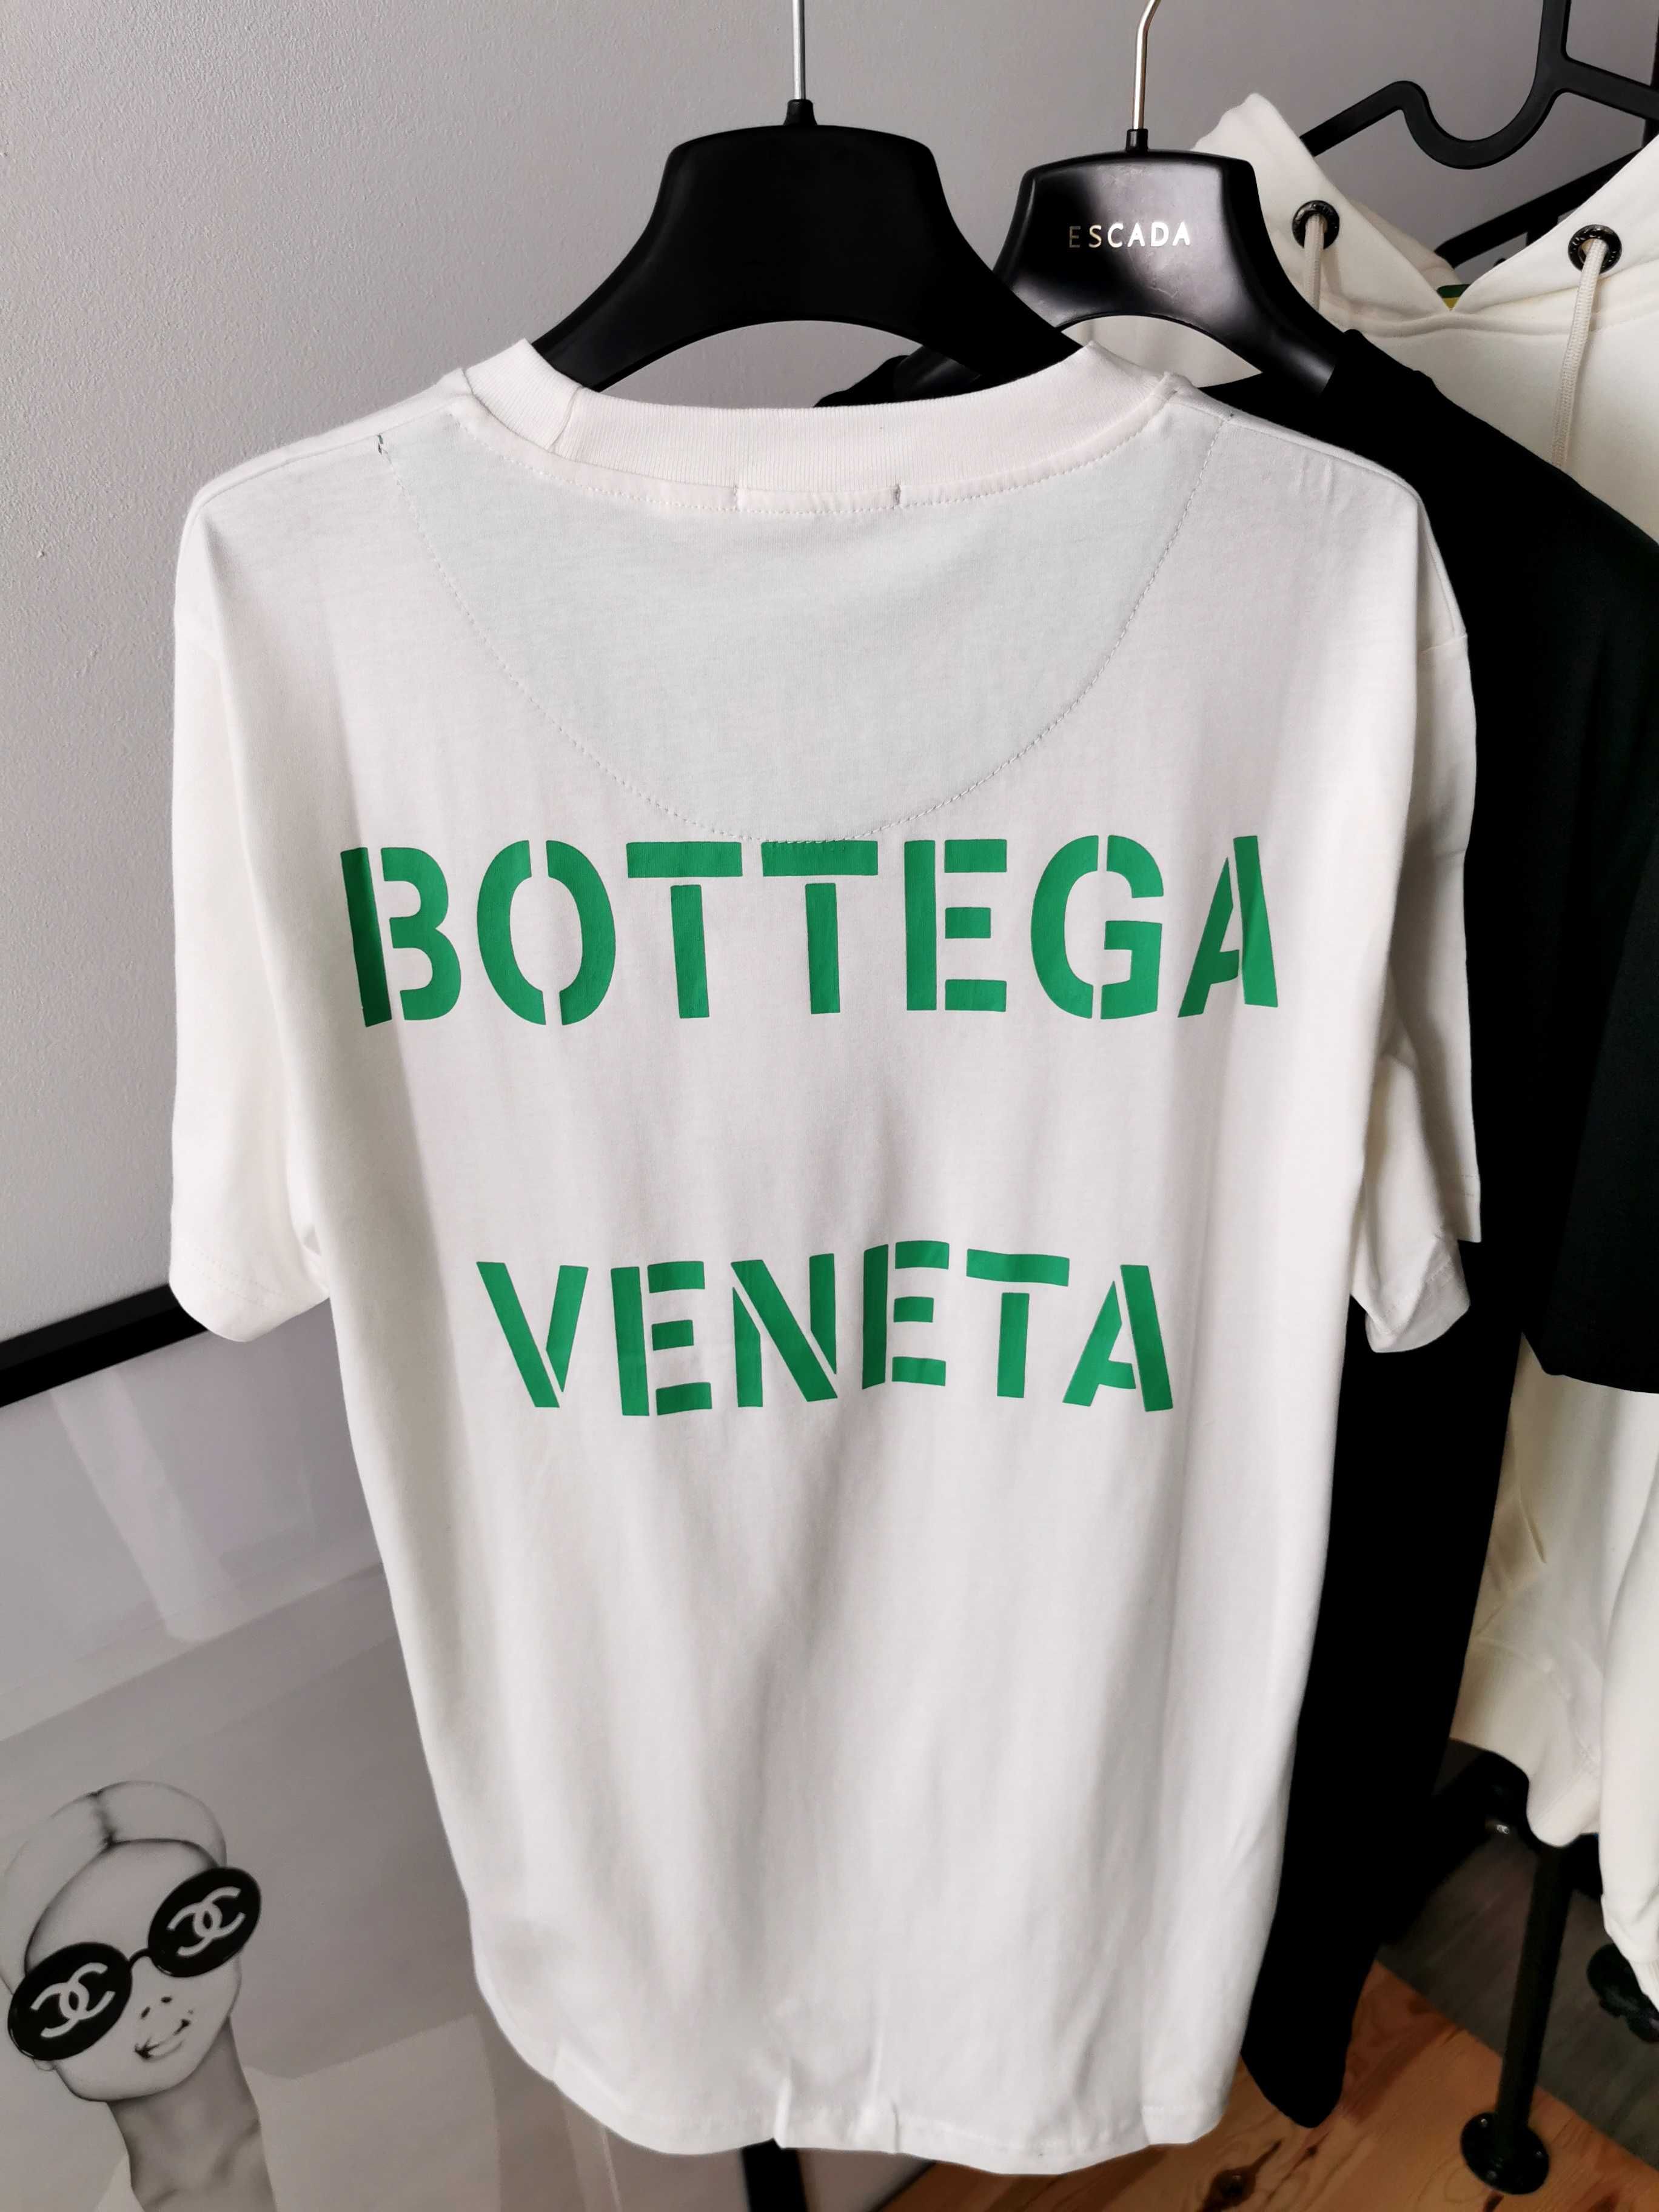 Bottega Veneta koszulka męska tshirt XXL, 3XL